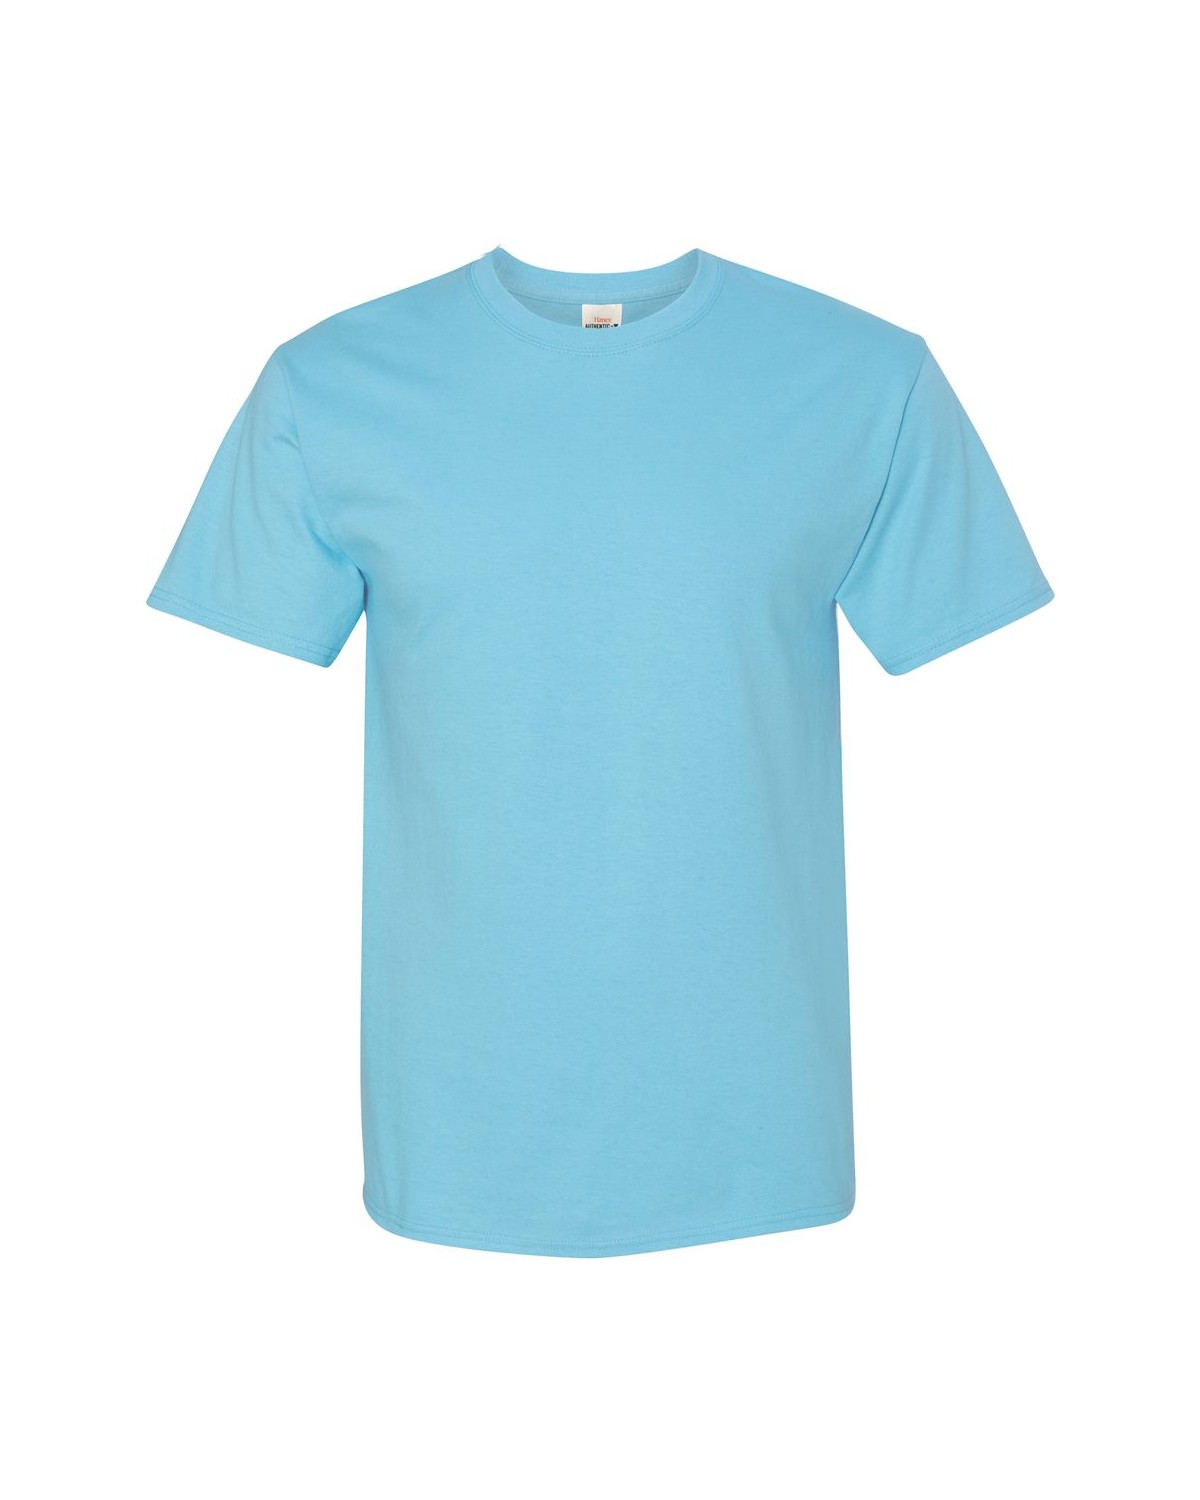 Hanes 5250 Authentic Short Sleeve T-Shirt